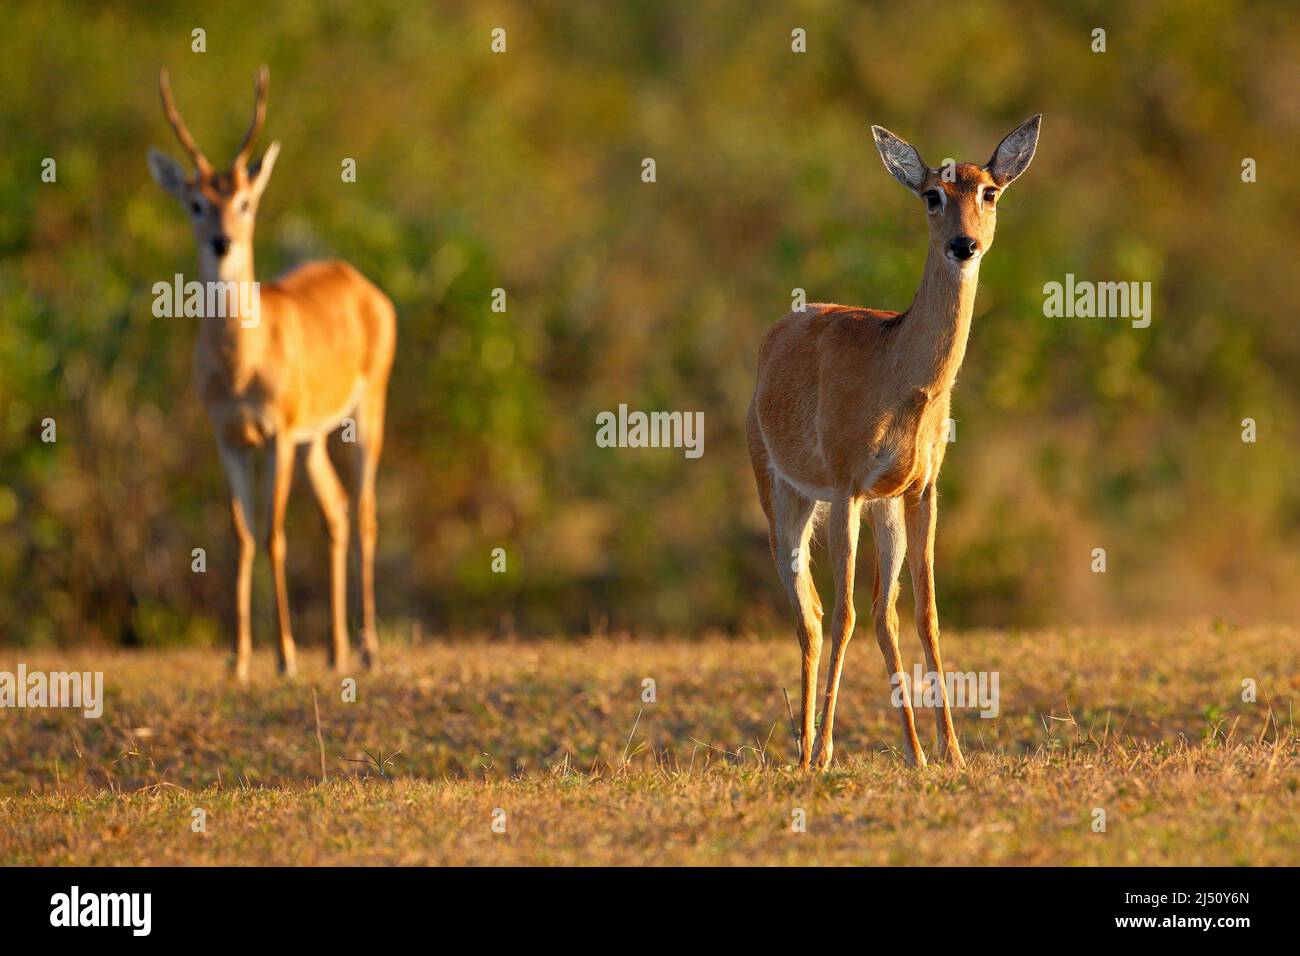 Pampas Deer, Ozotoceros bezoarticus, sitting in the green grass, Pantanal, Brazil. Wildlife scene from nature. Pair if deer, nature habitat. Wildlife Stock Photo